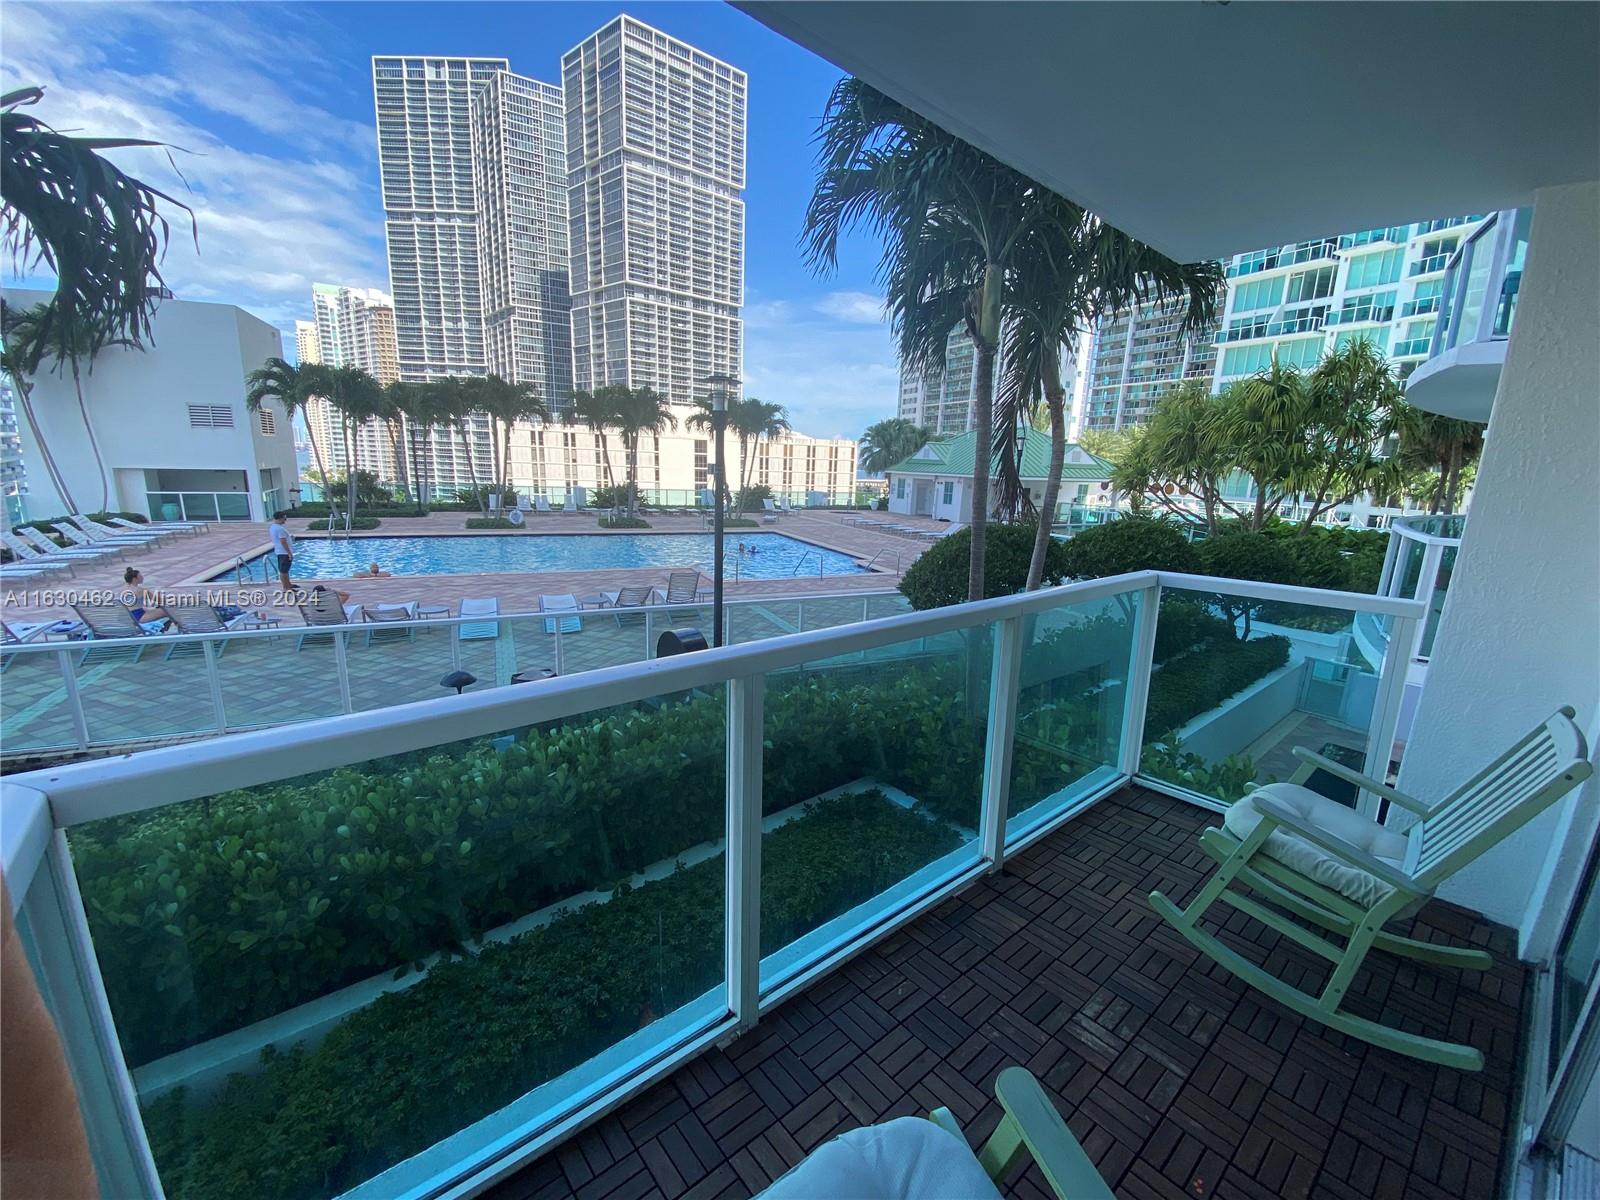 Rental Property at 31 Se 5th St 1204, Miami, Broward County, Florida - Bedrooms: 2 
Bathrooms: 2  - $3,900 MO.